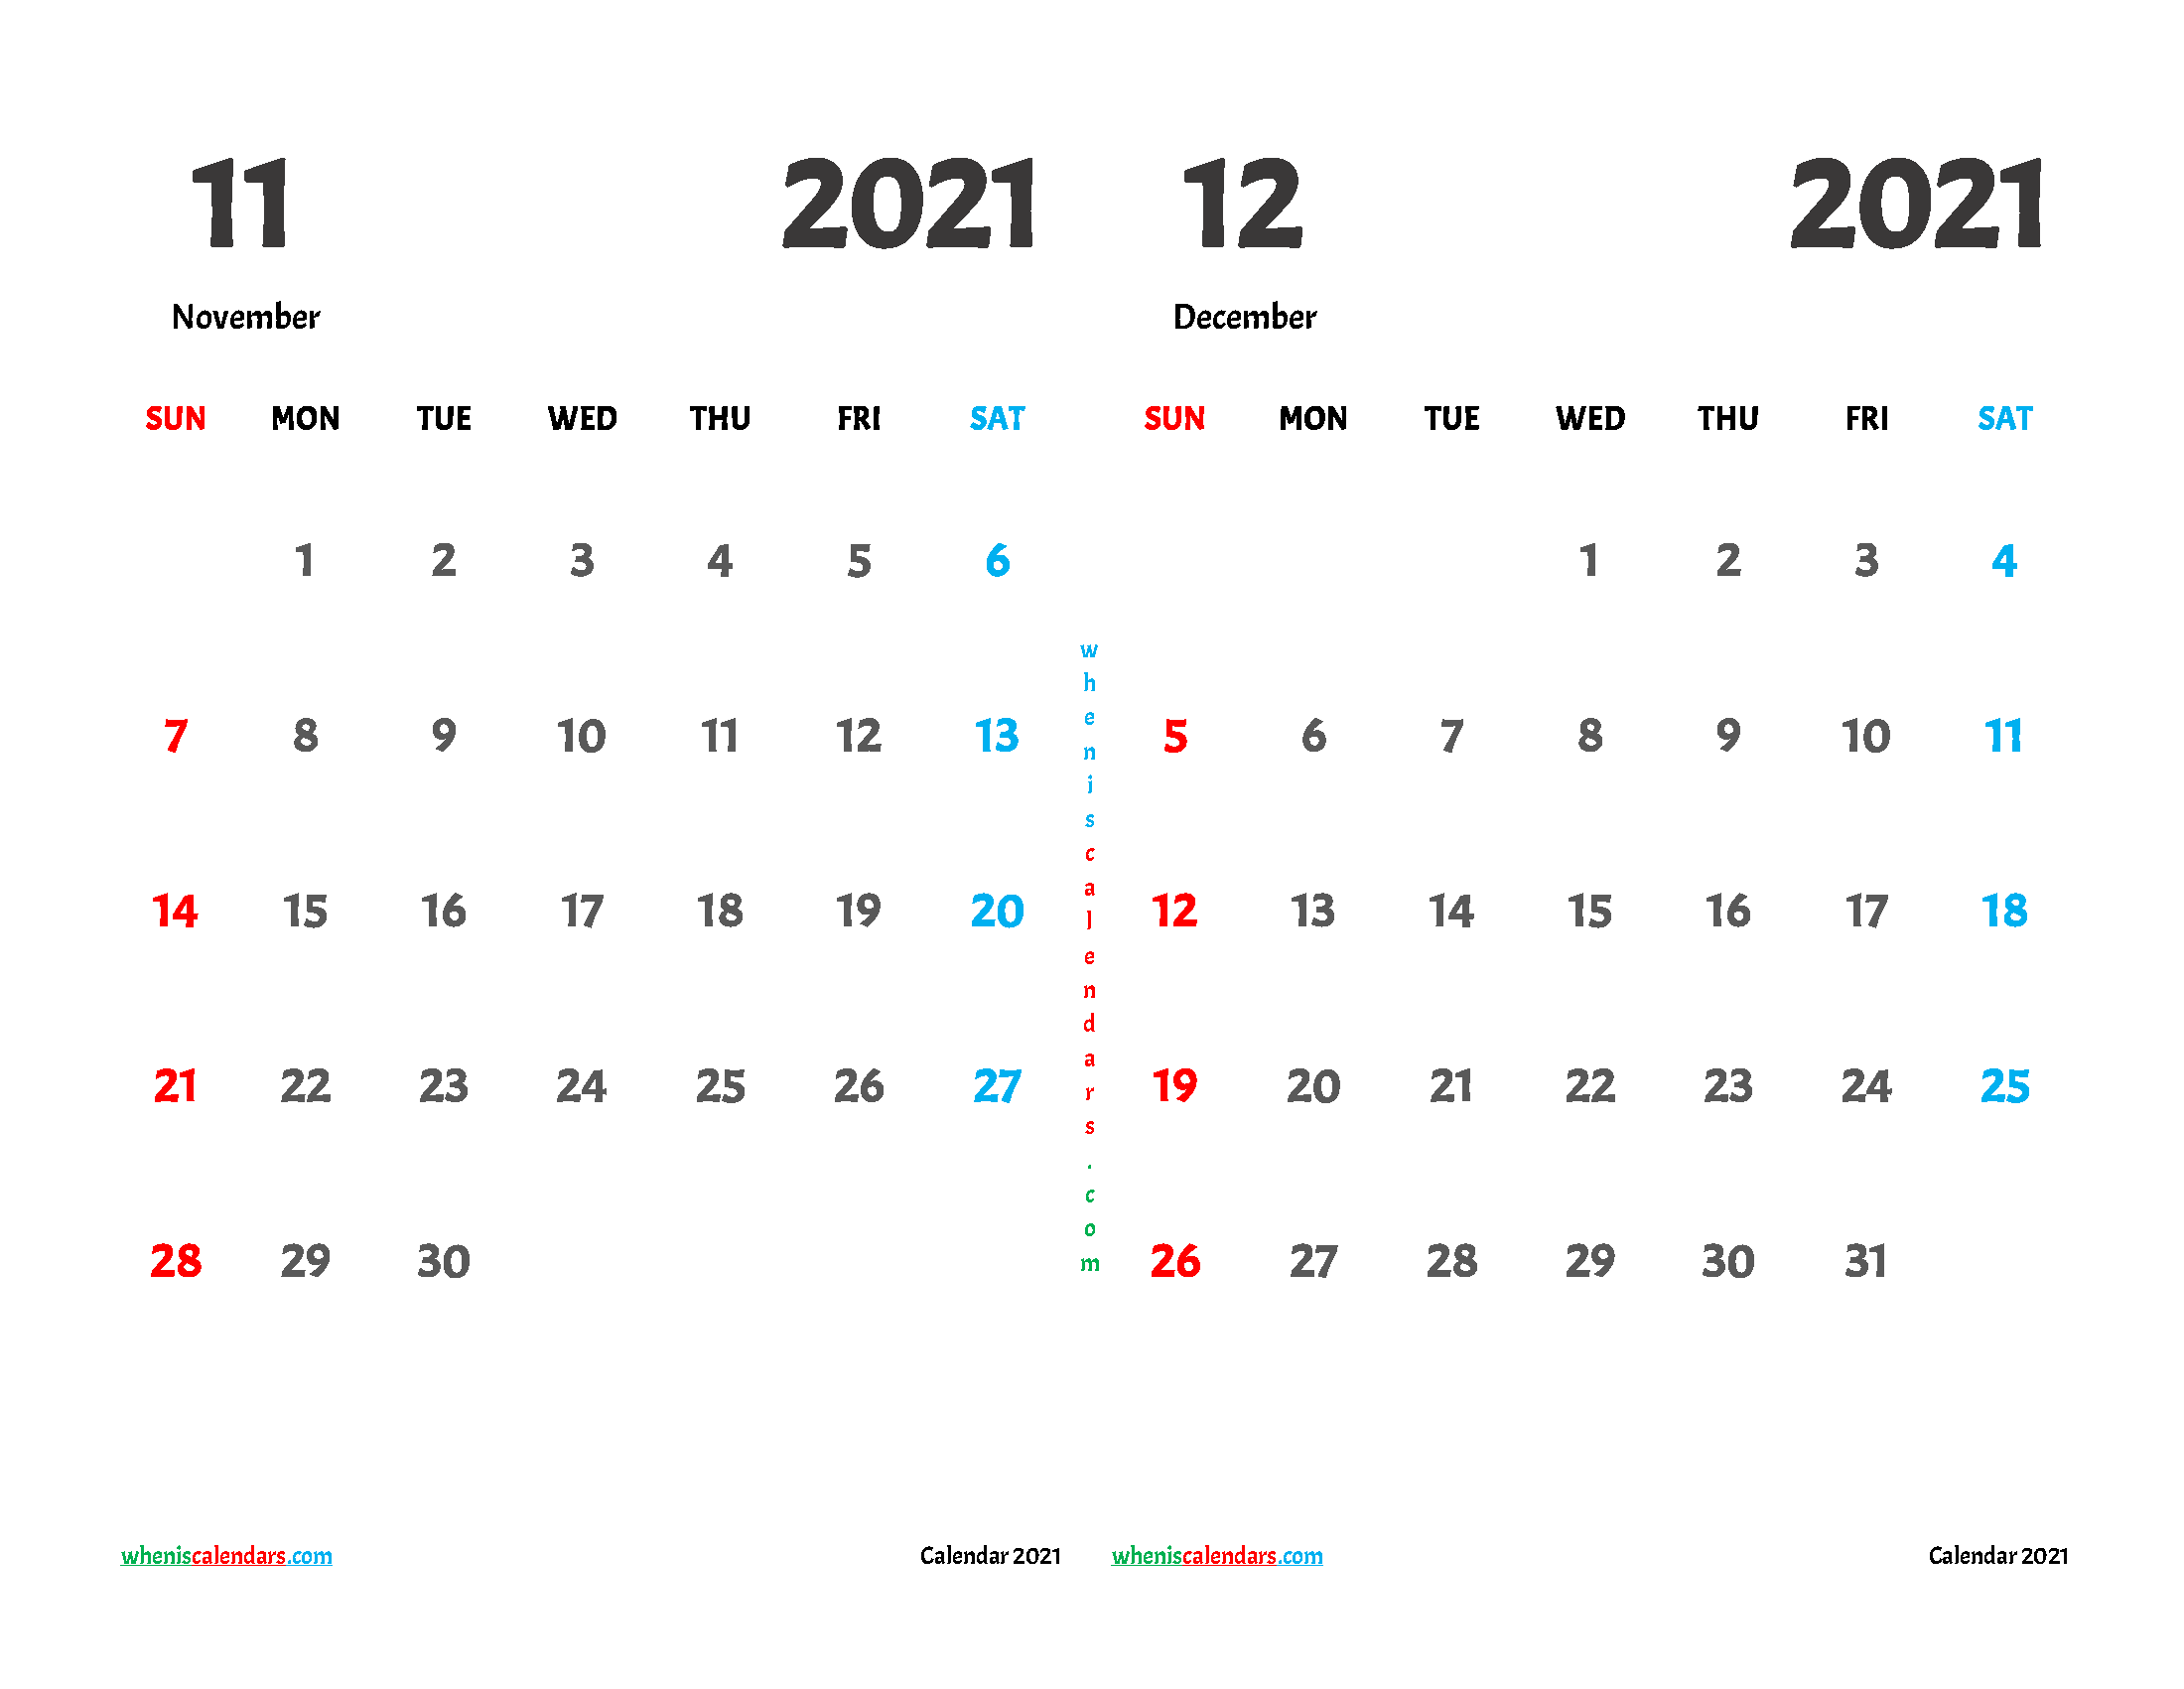 Calendar for November and December 2021